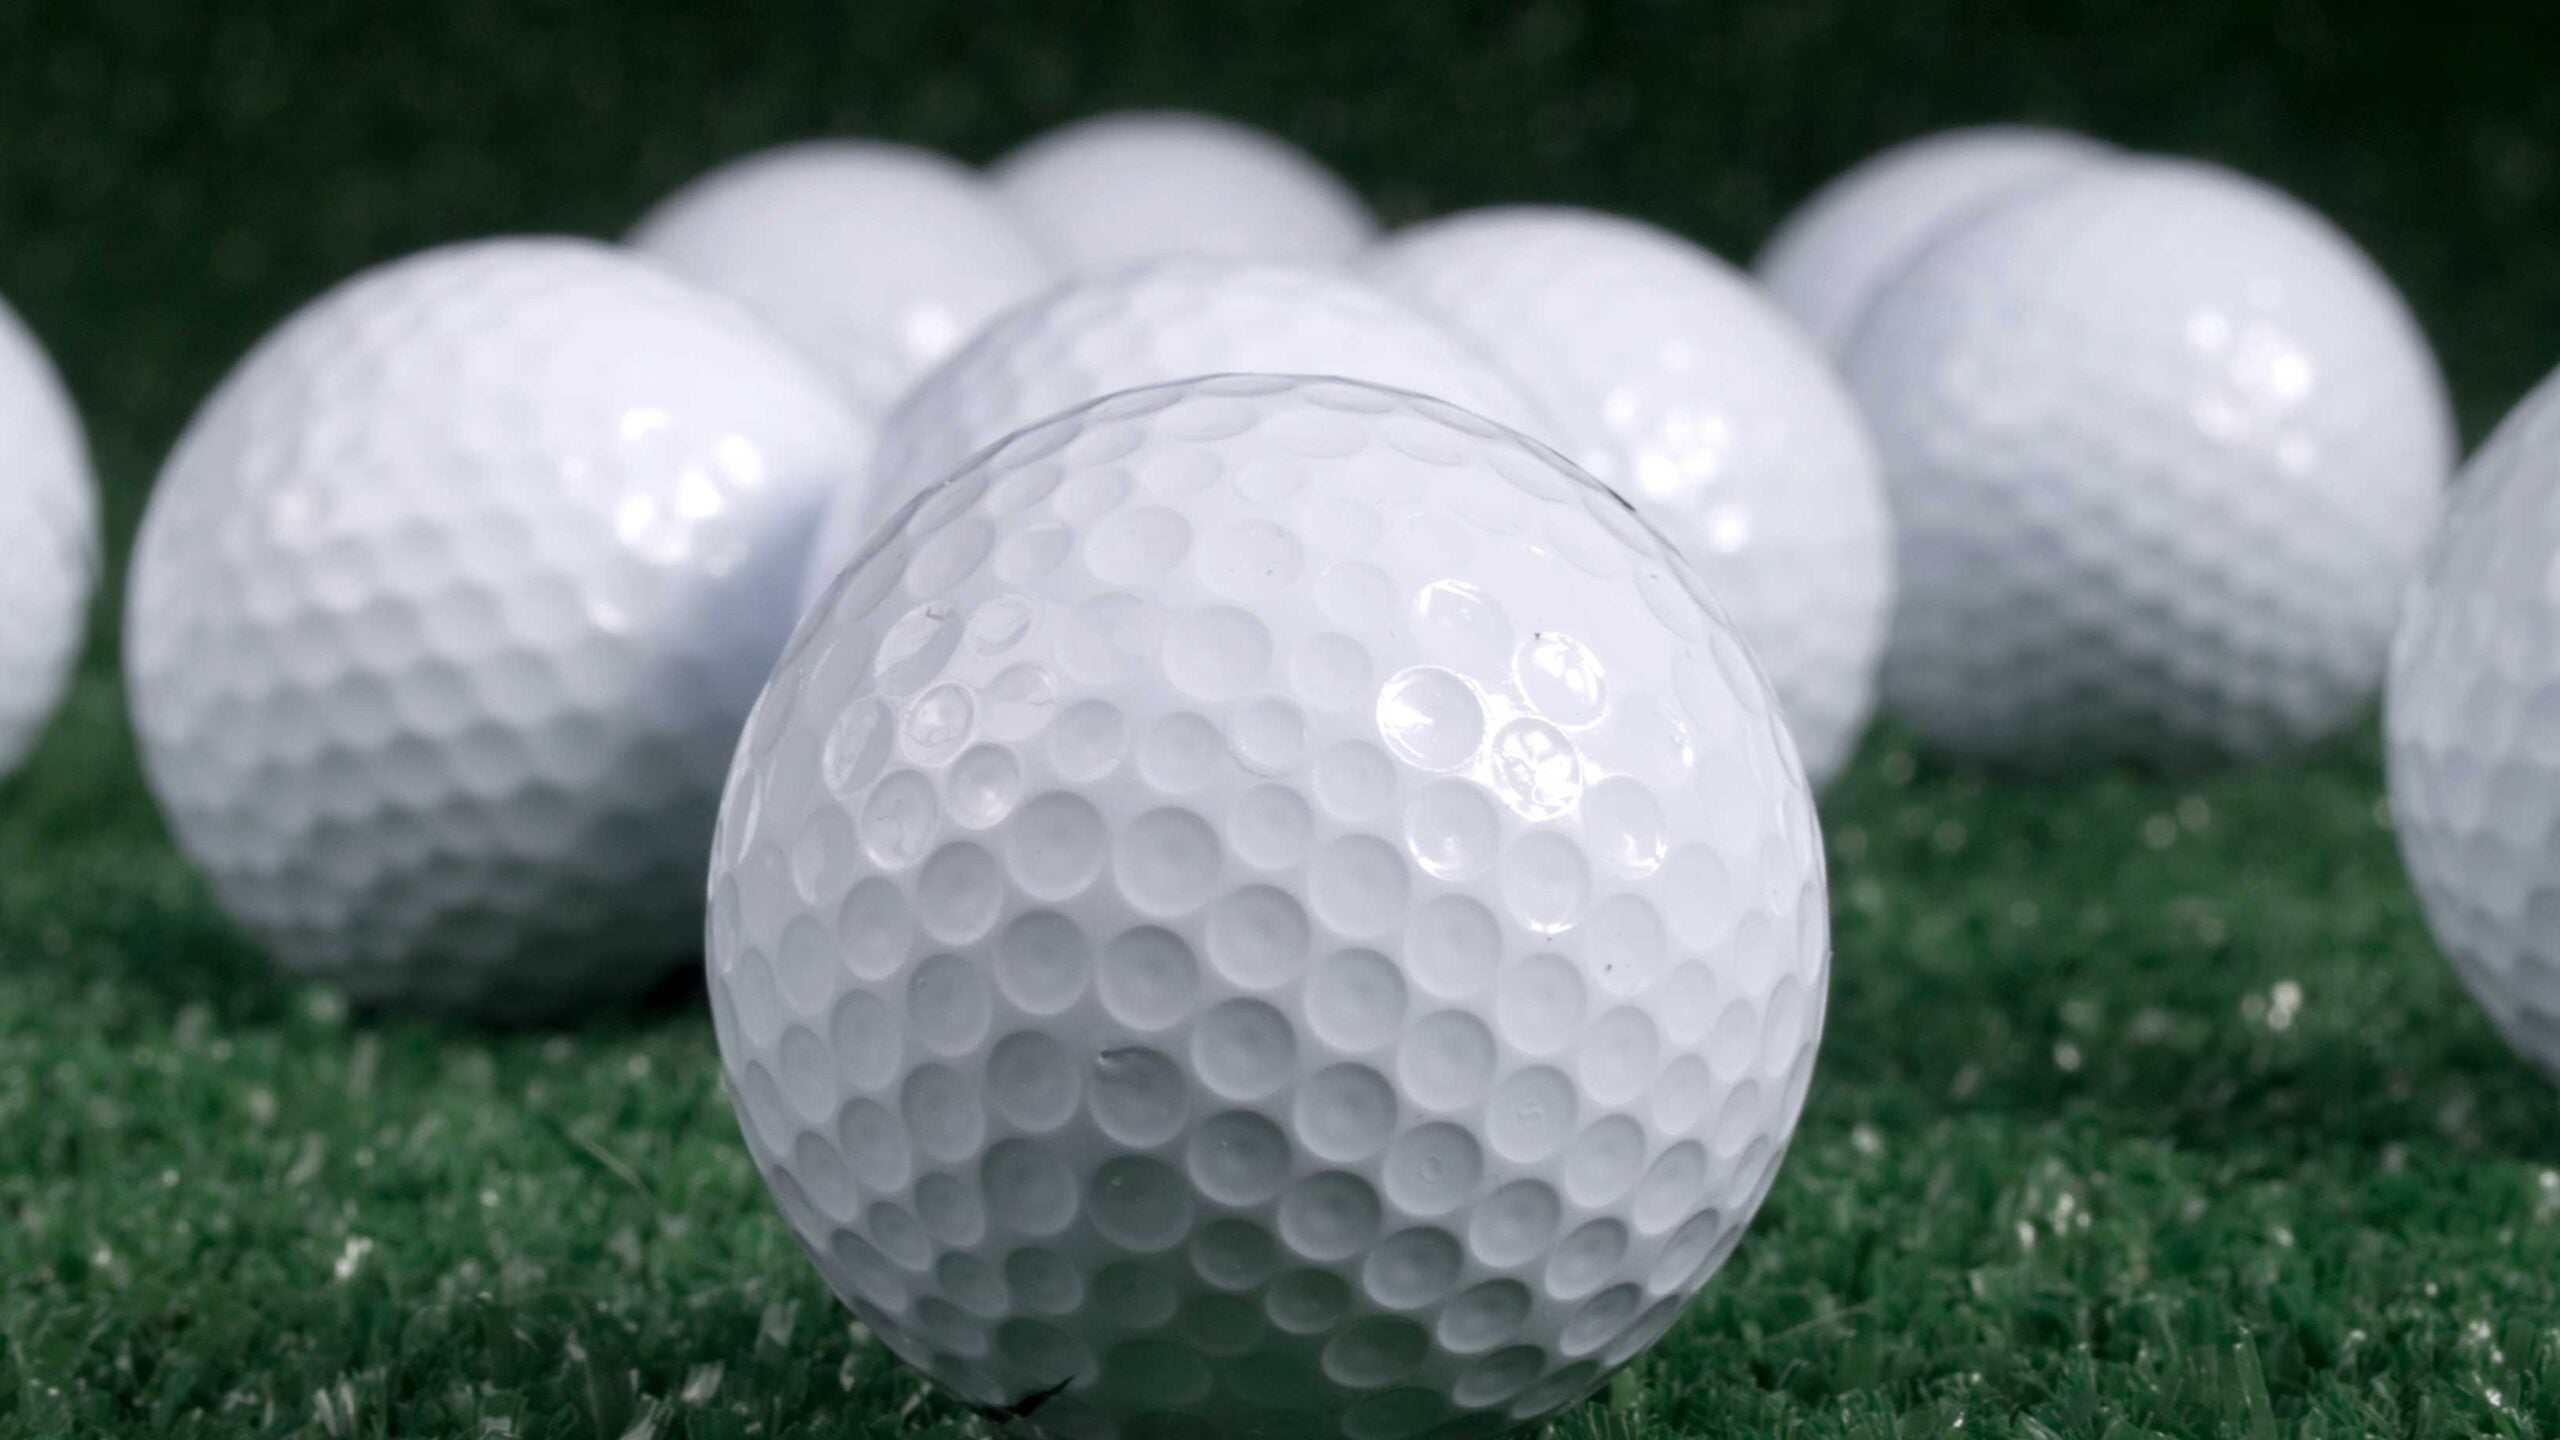 several golf balls on turf